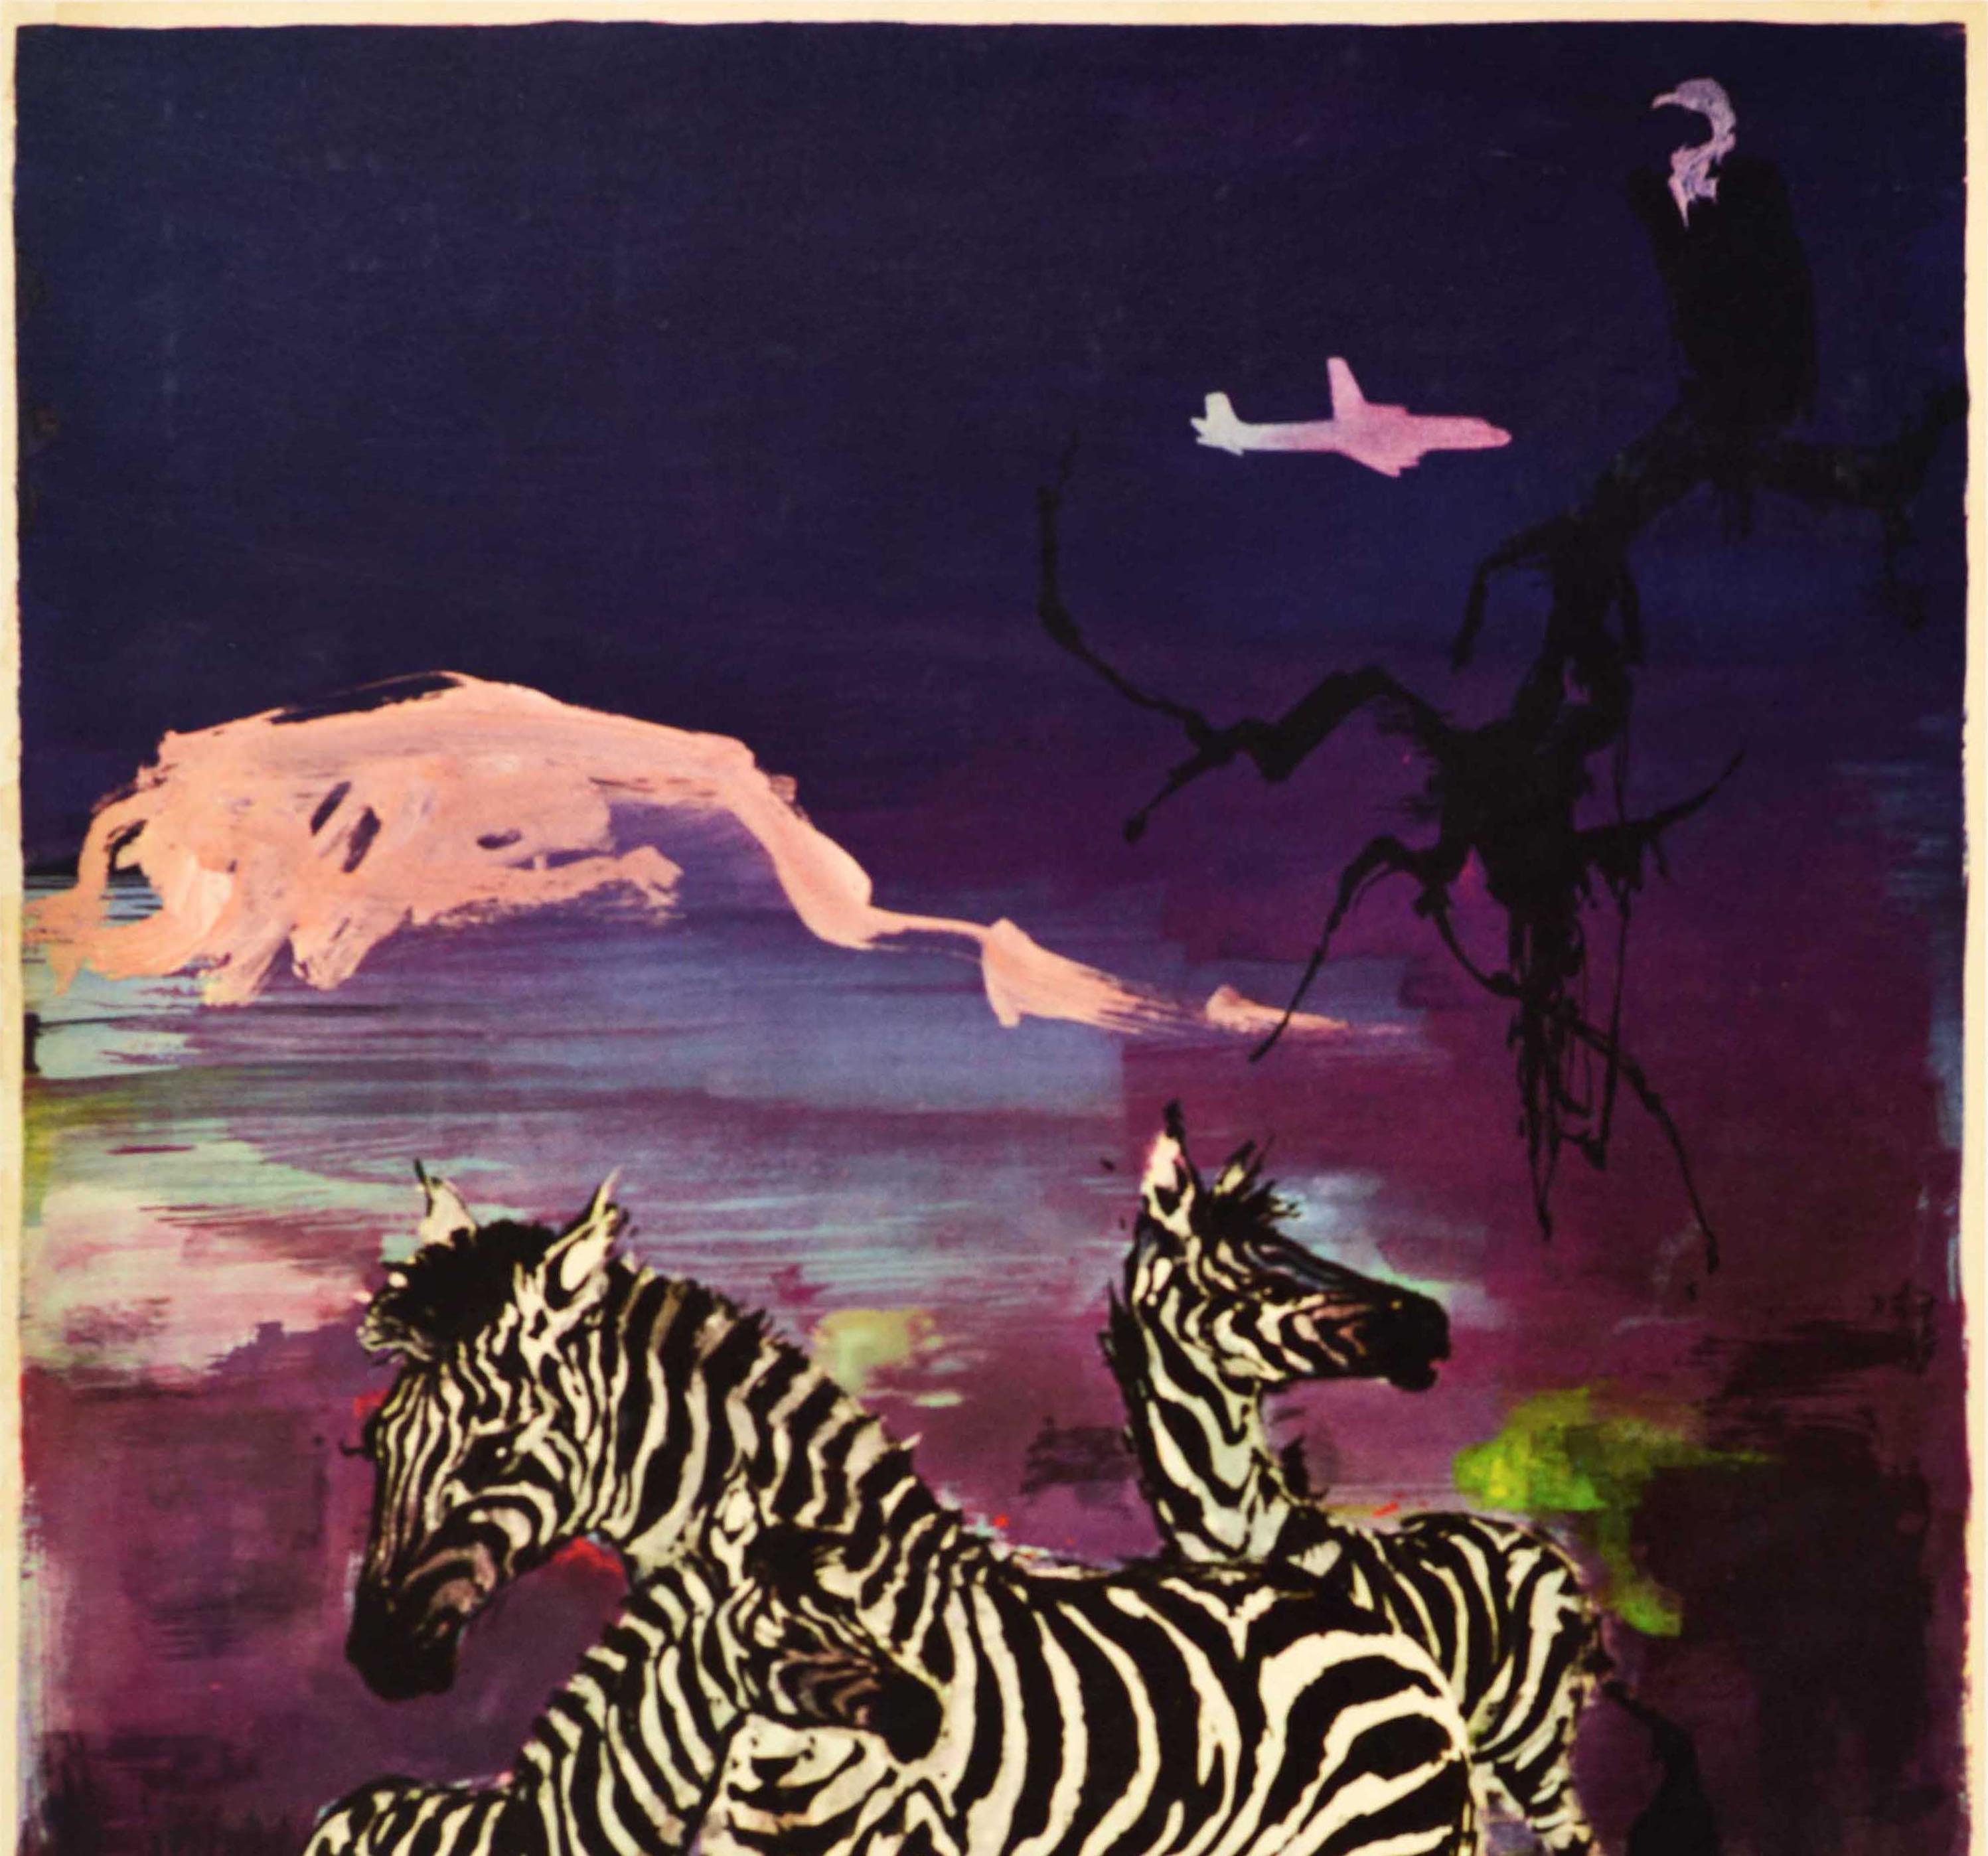 Original Vintage Travel Poster Africa SAS Scandinavian Airlines System Zebra Art - Print by Otto Nielsen